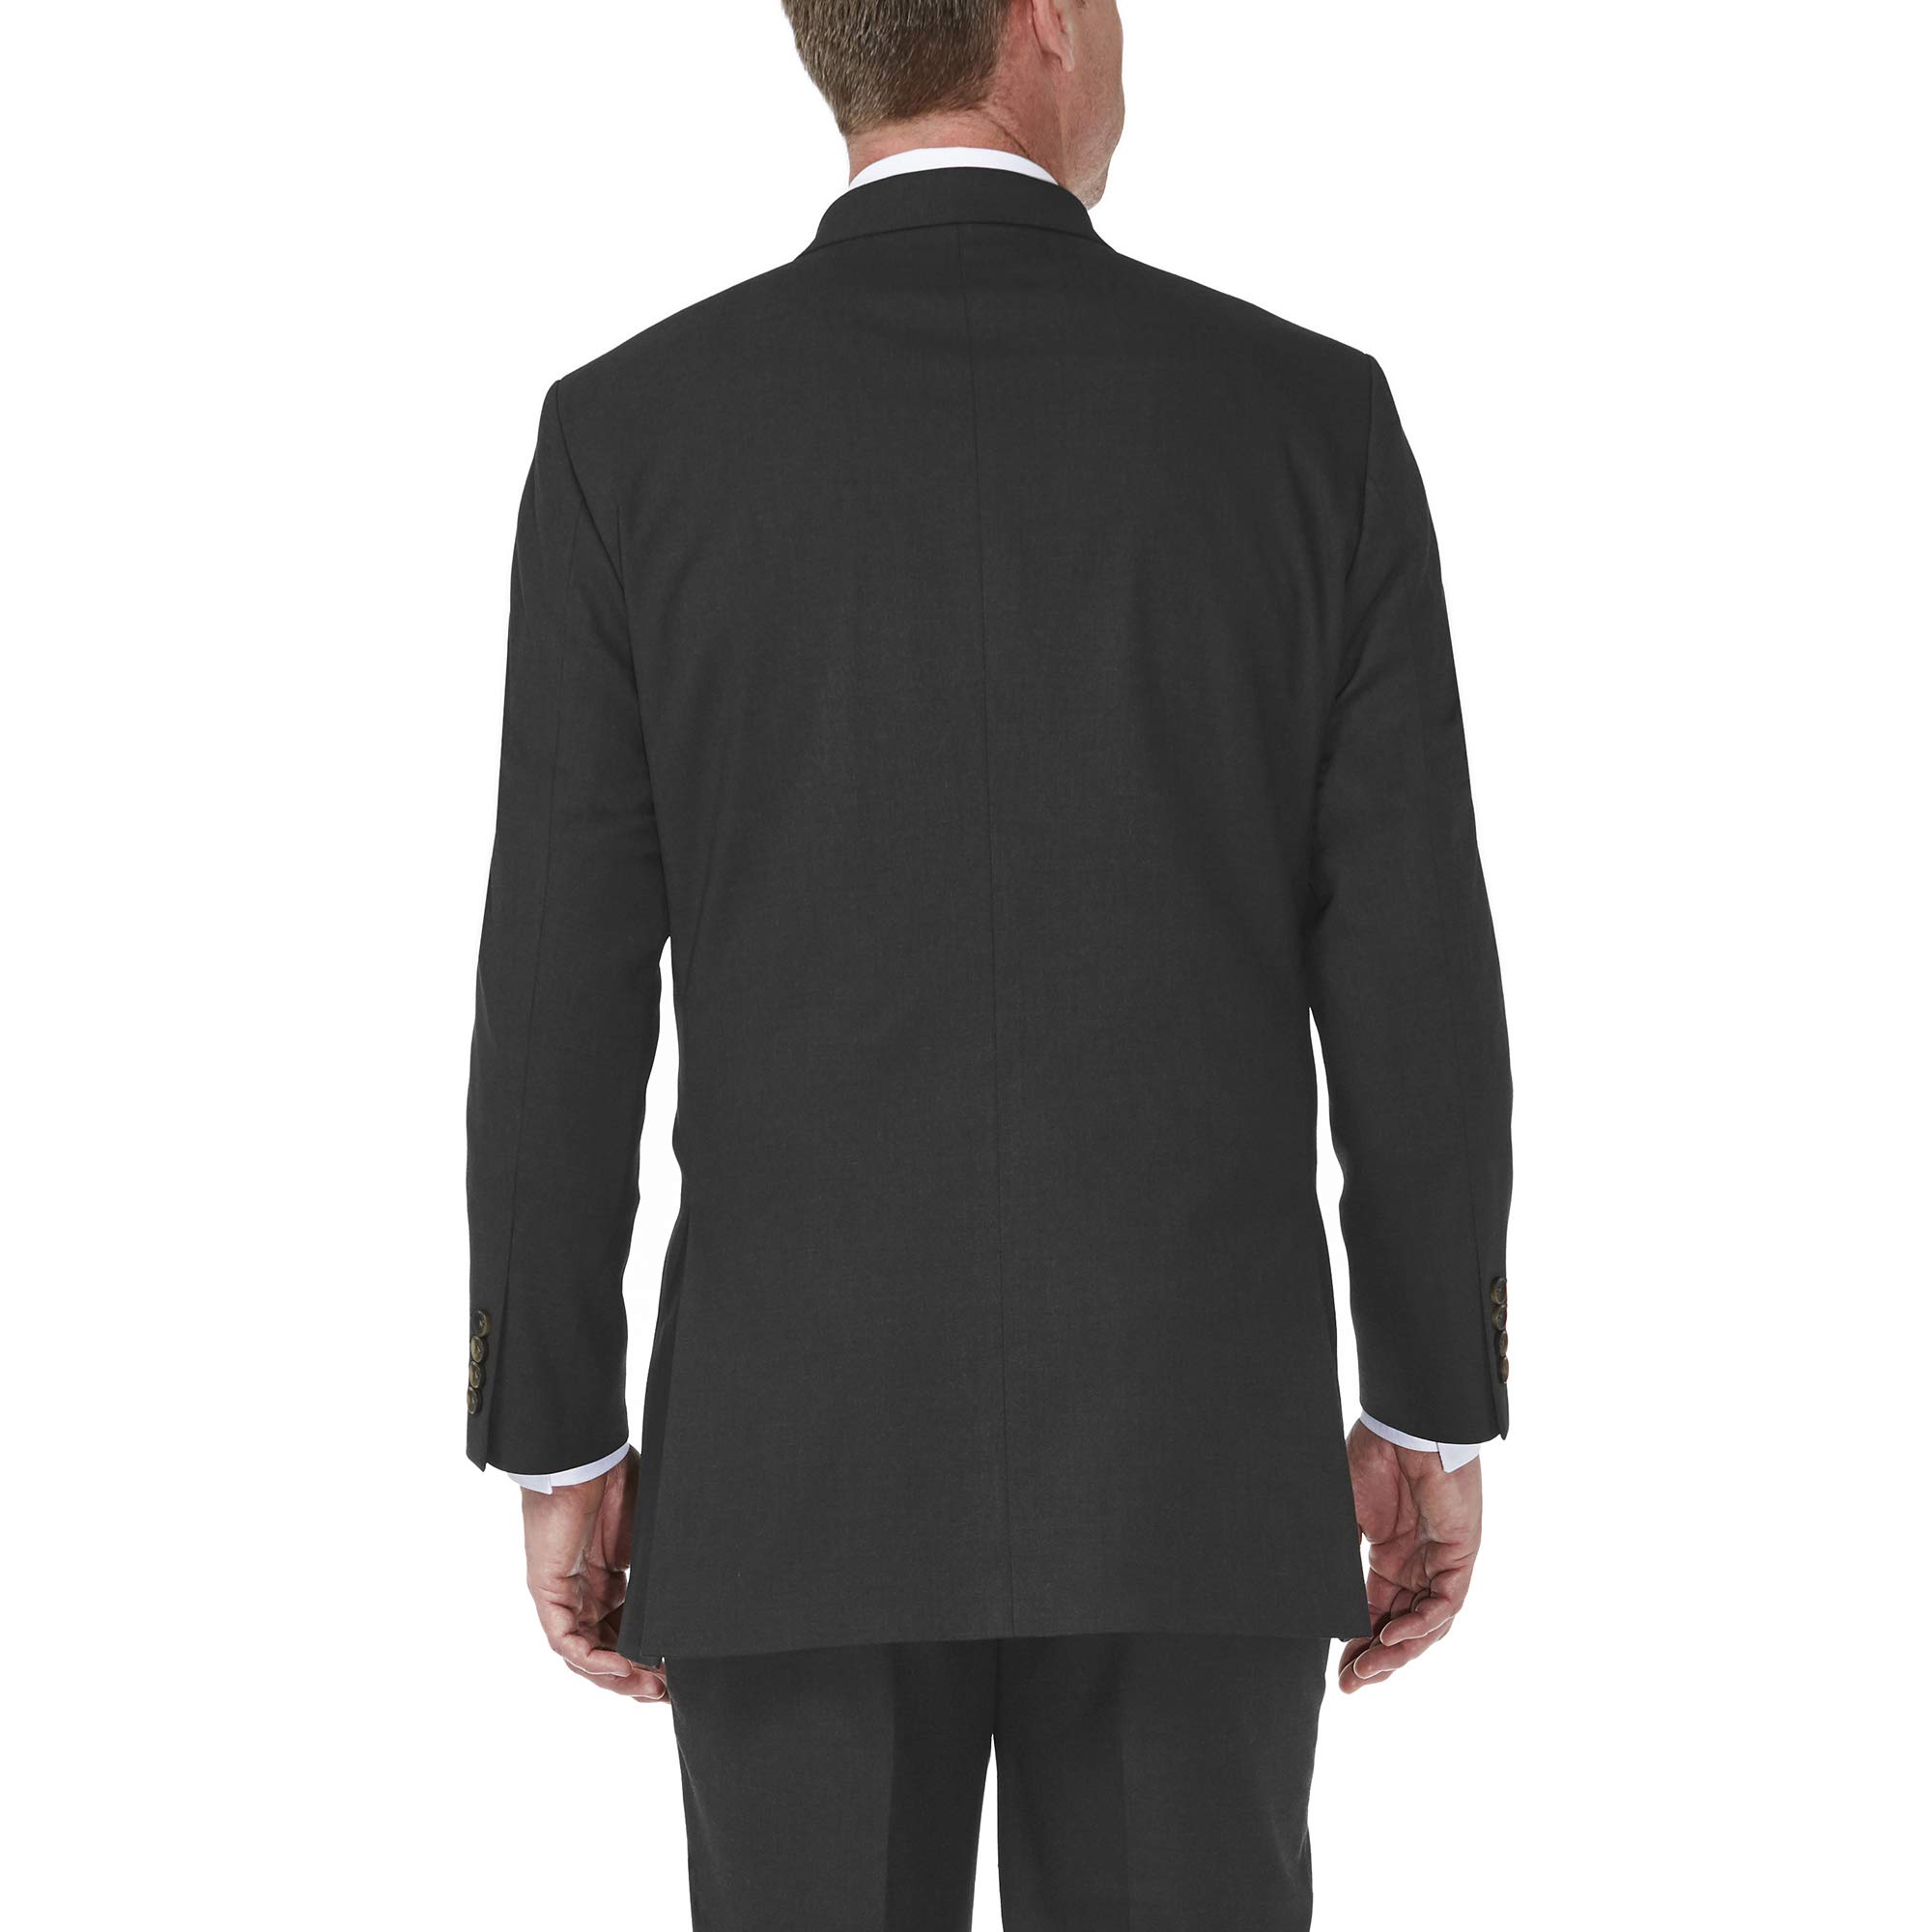 Haggar Men's Premium Stretch Classic Fit Big & Tall Suit Separates-Pants & Jackets